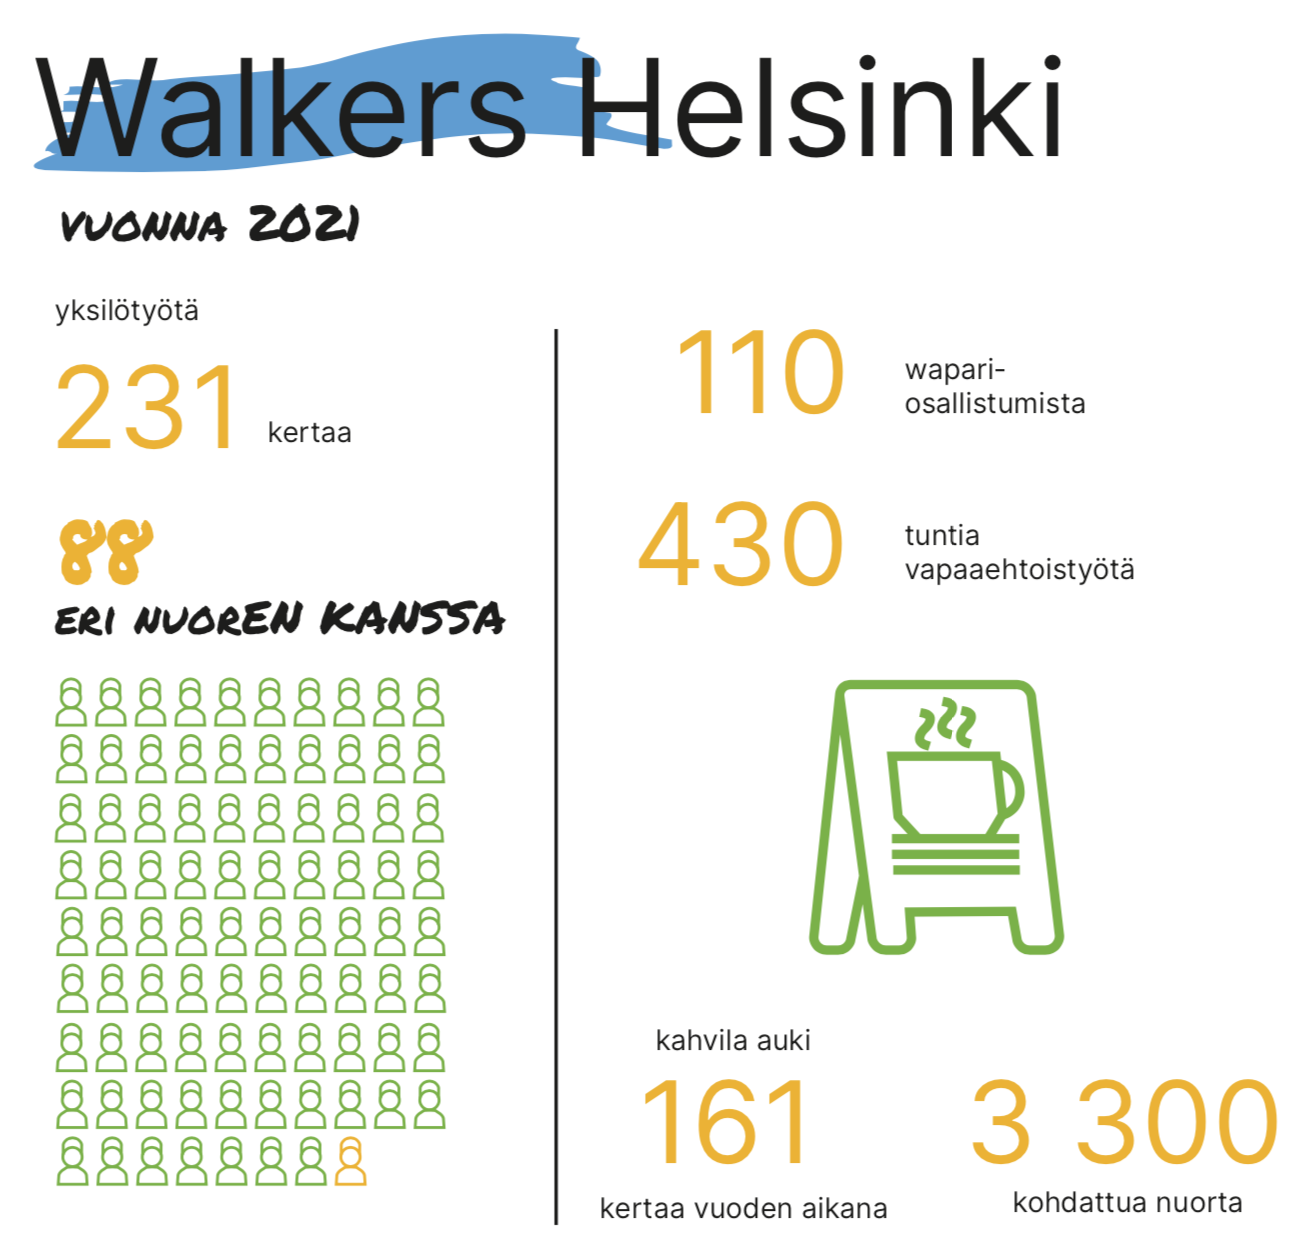 Walkers-Helsingin tunnuslukuja vuodelta 2021.